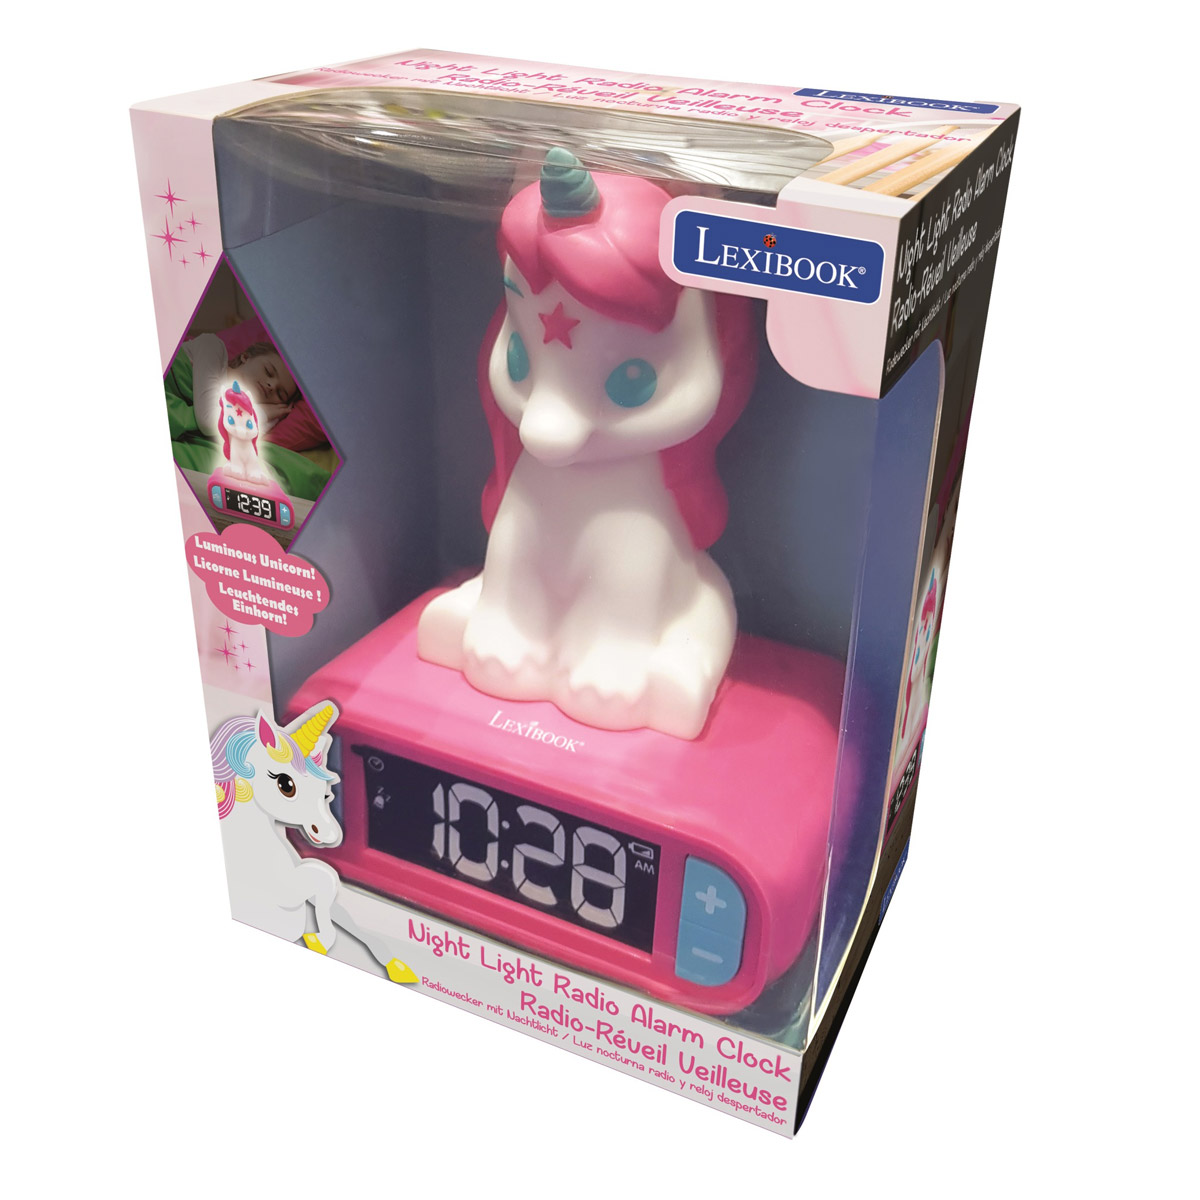 Lexibook - Unicorn Digital Alarm Clock for kids with Night Lightn Snooze and Radio, Childrens Clock, Luminous Unicorn, Pink colour - RL800UNI - image 4 of 8